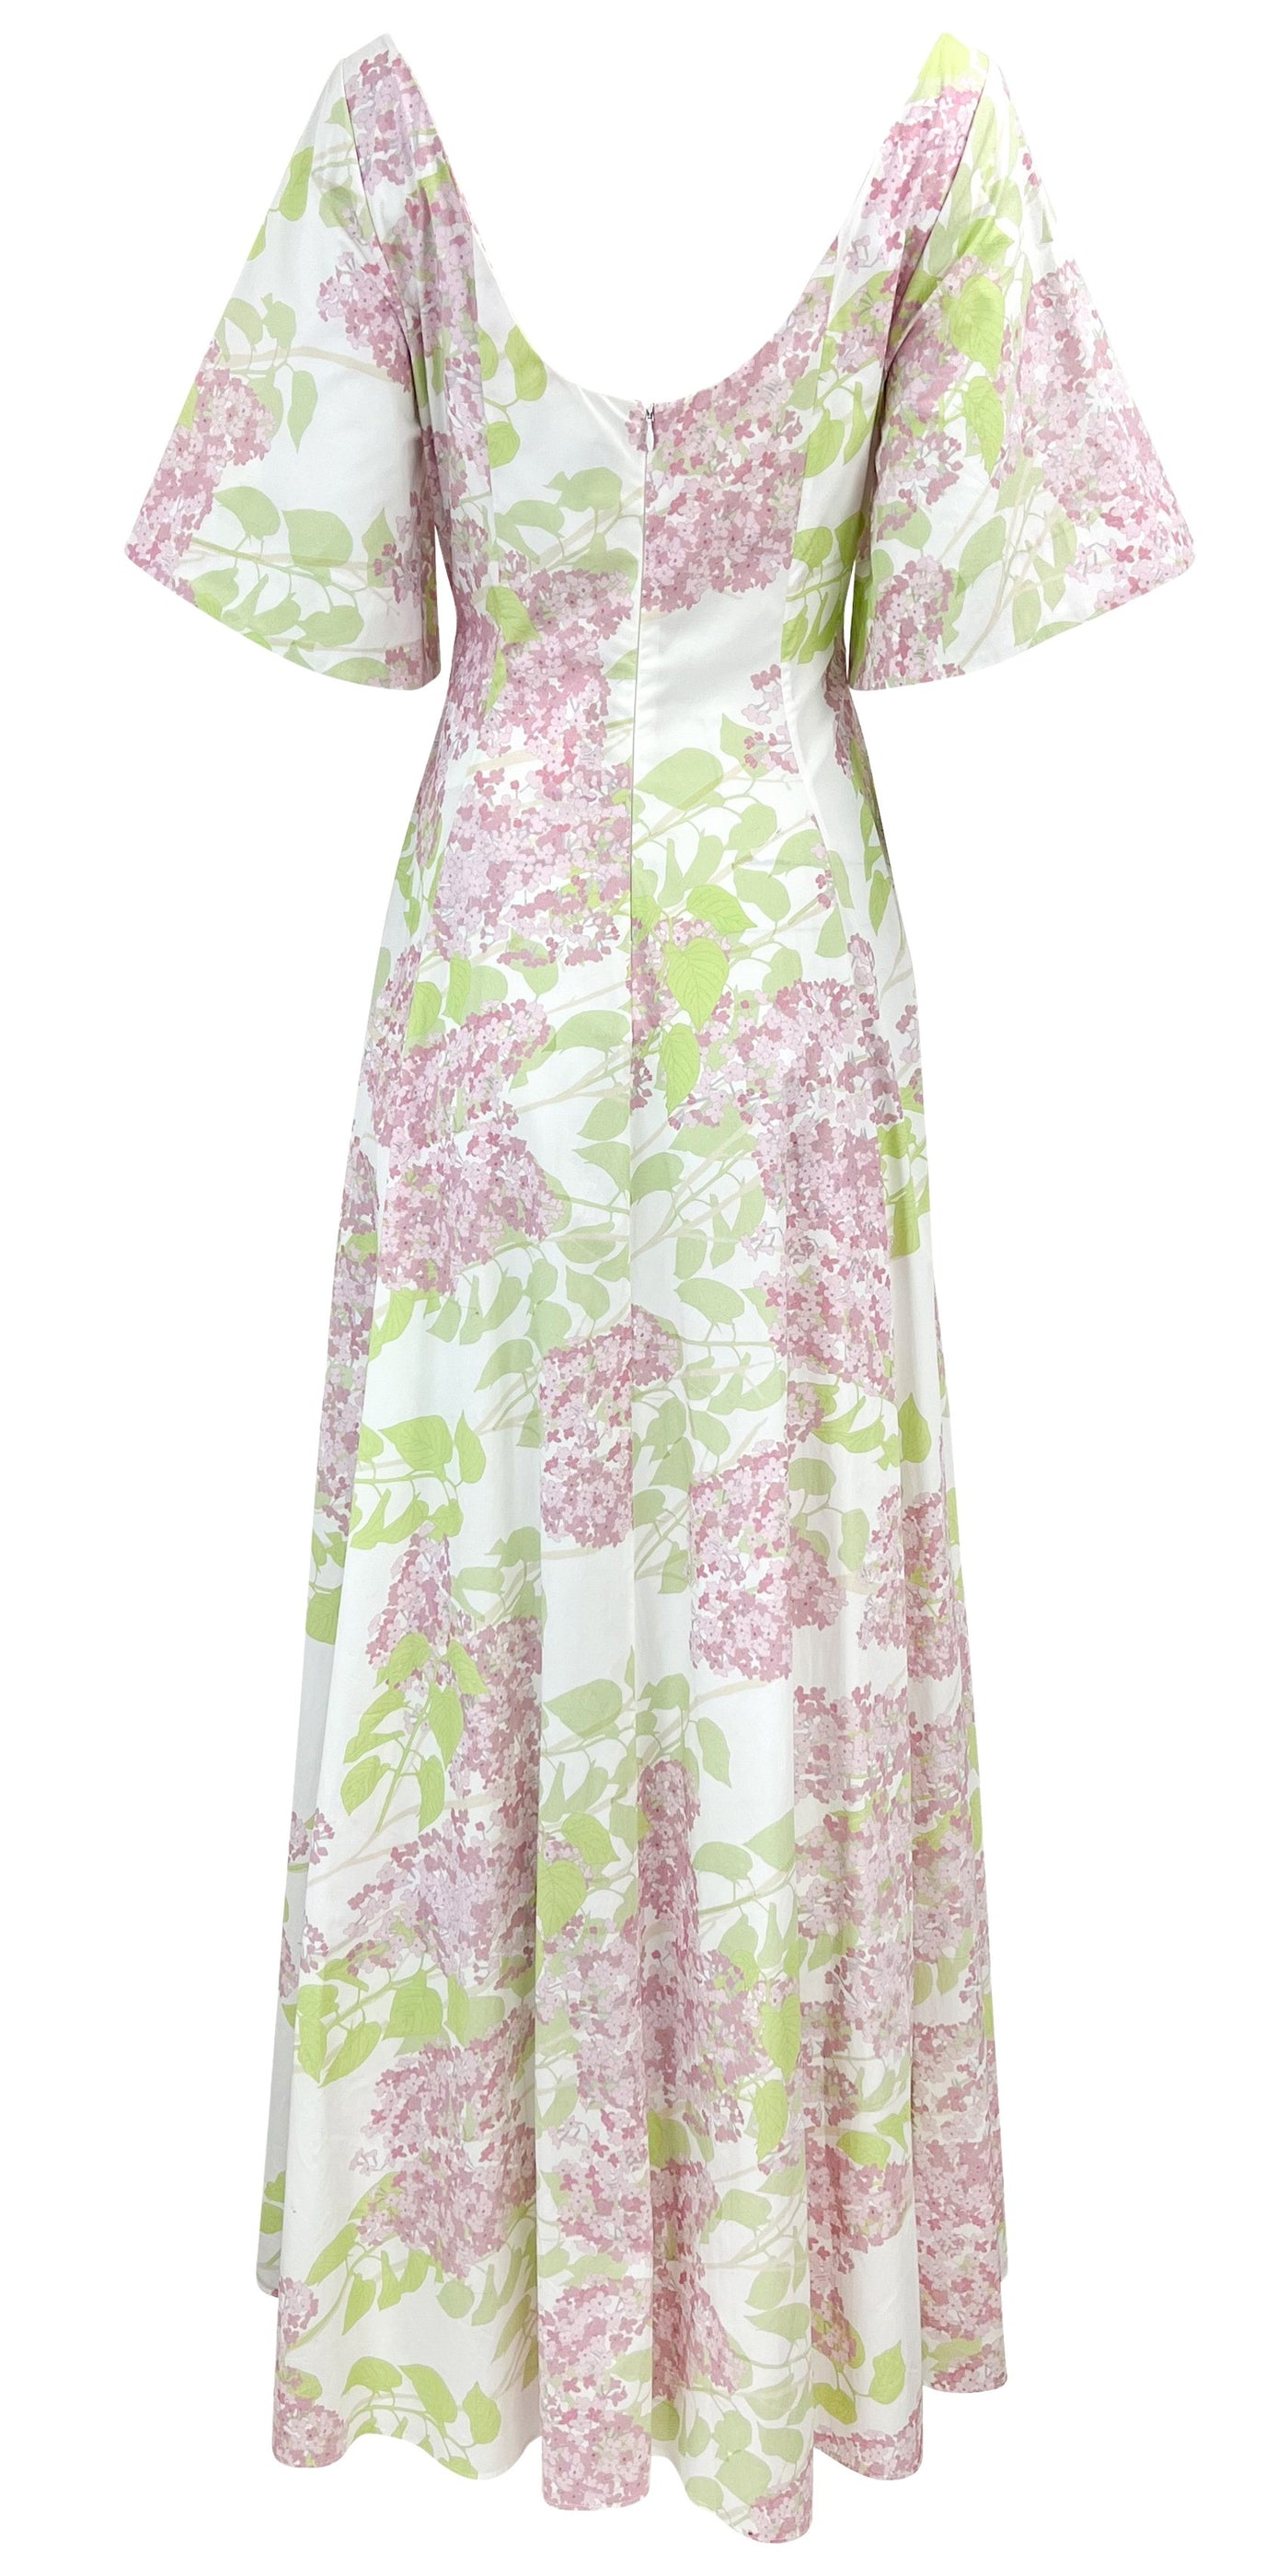 Bernadette Maude Dress in Lilac on Pink/White - Discounts on Bernadette at UAL